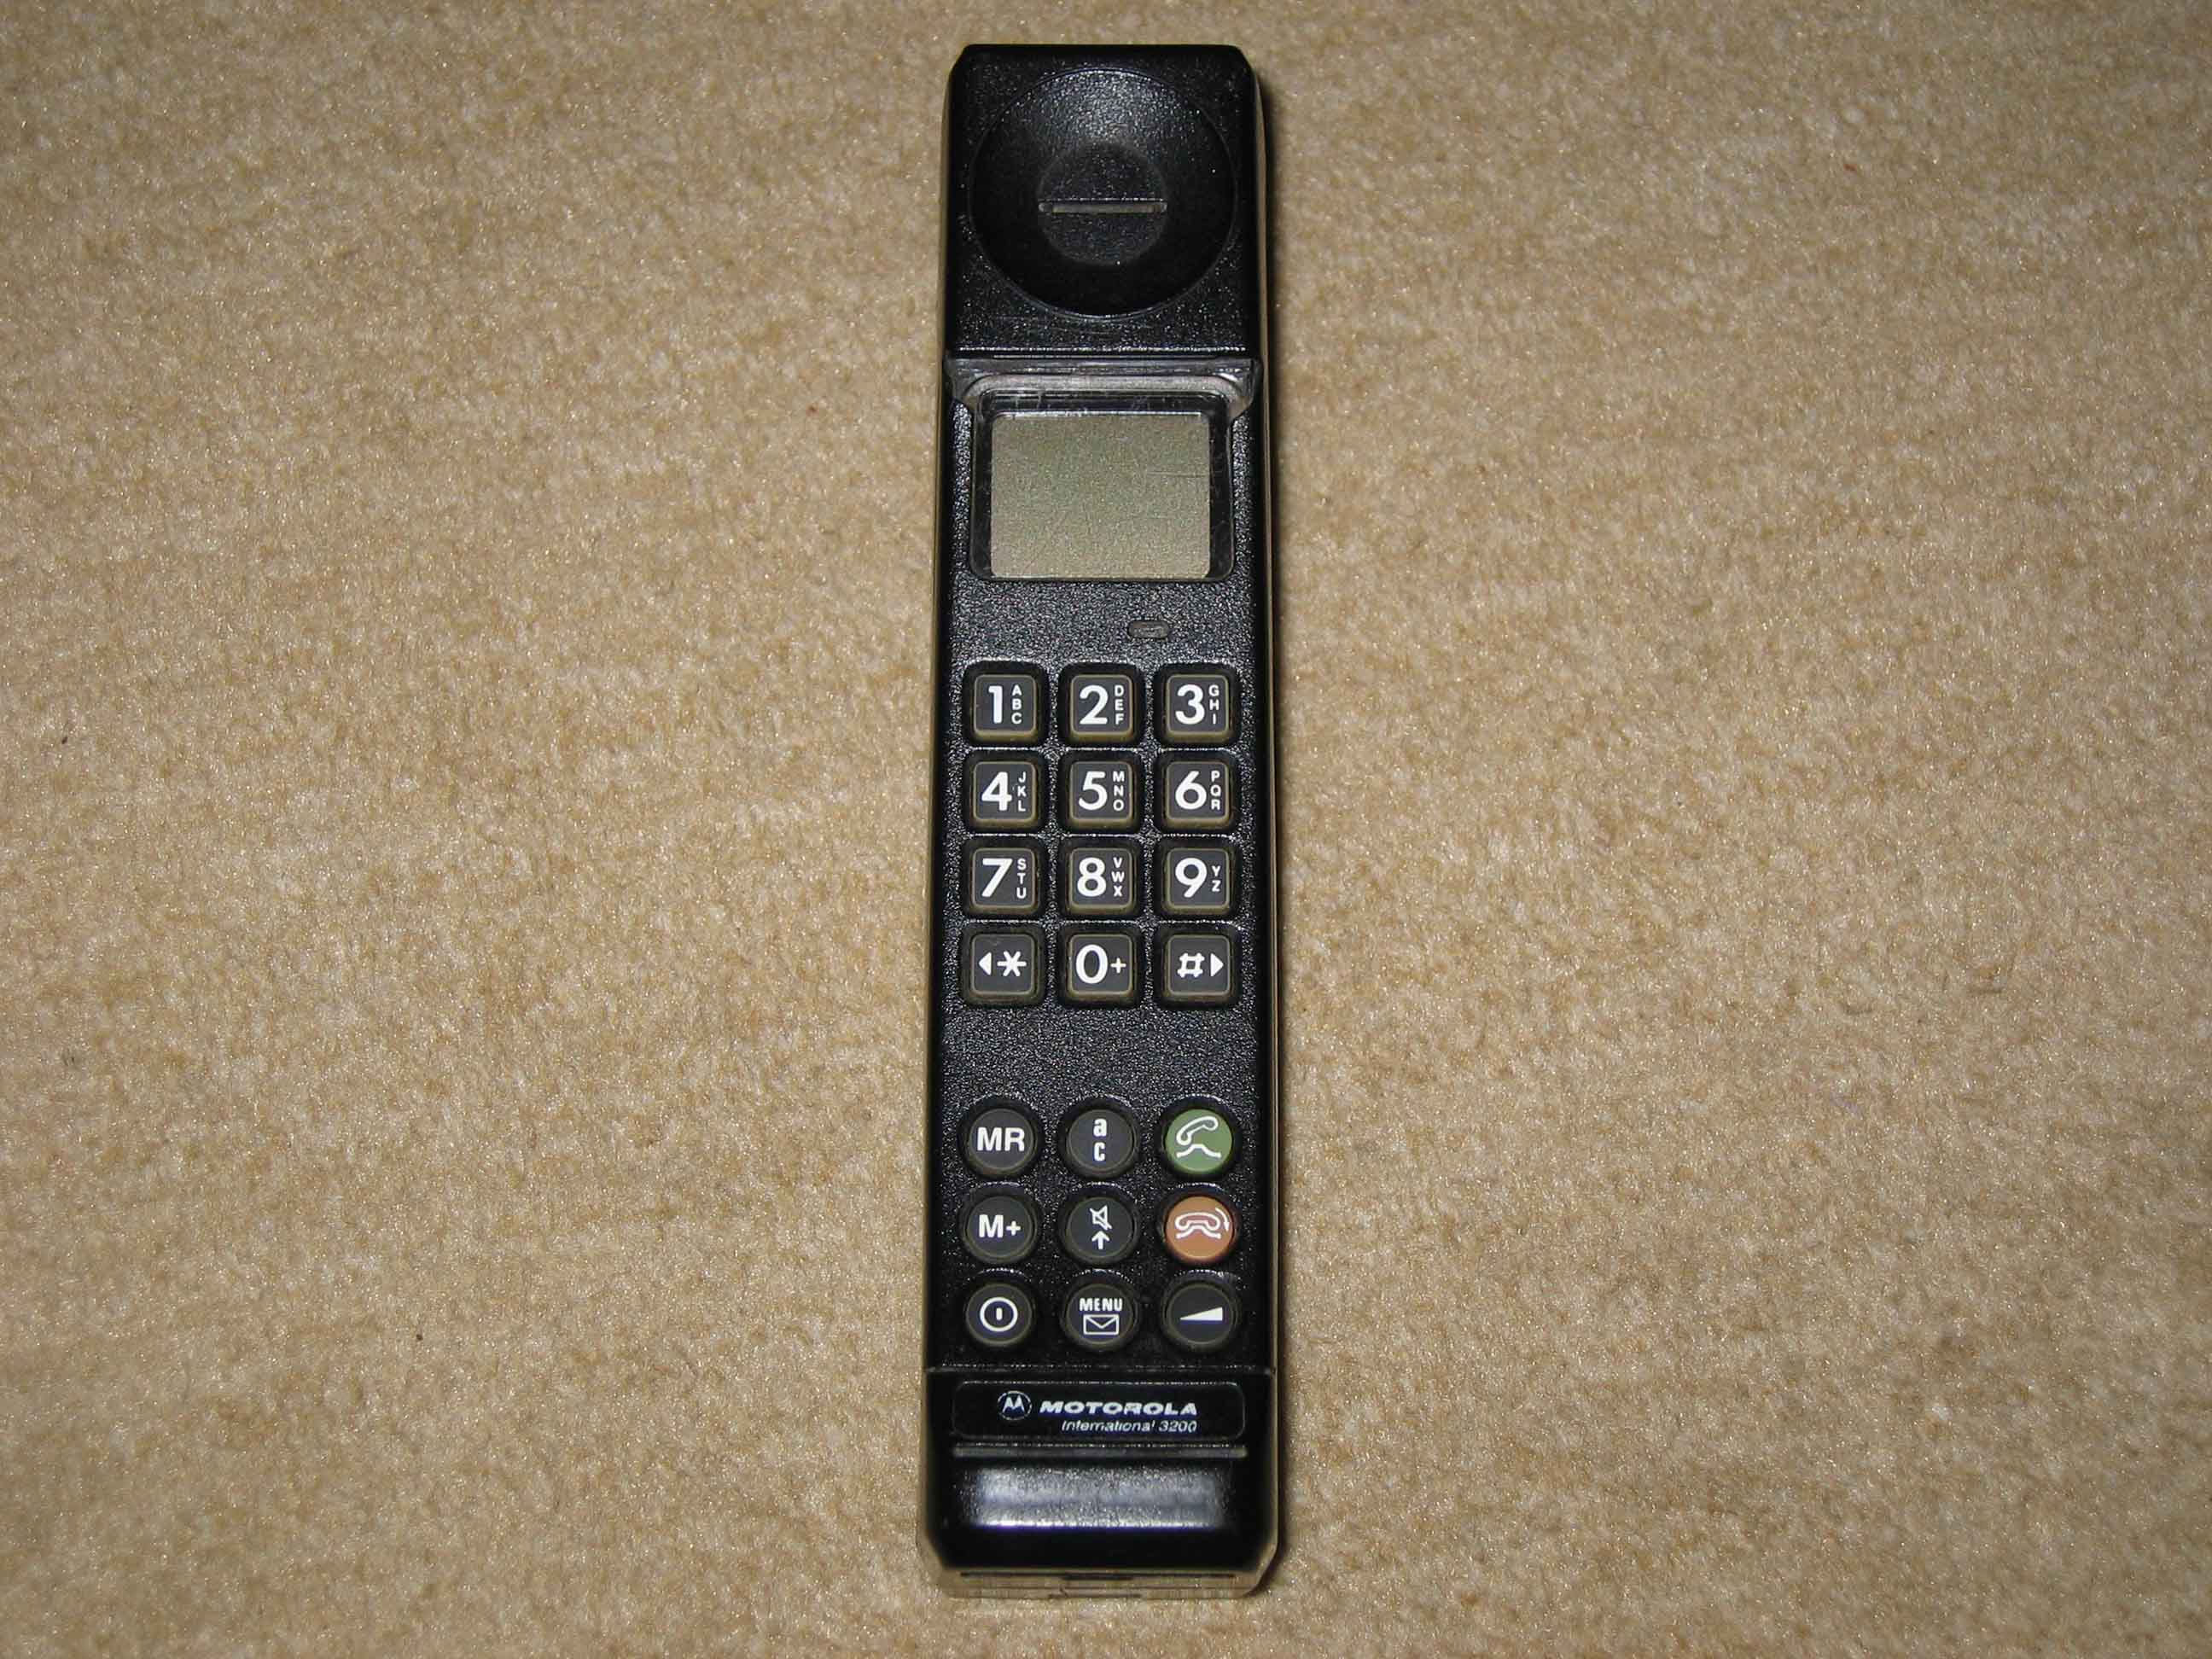 MOTOROLA GSM International 3200 GSM brick phone Vintage | eBay